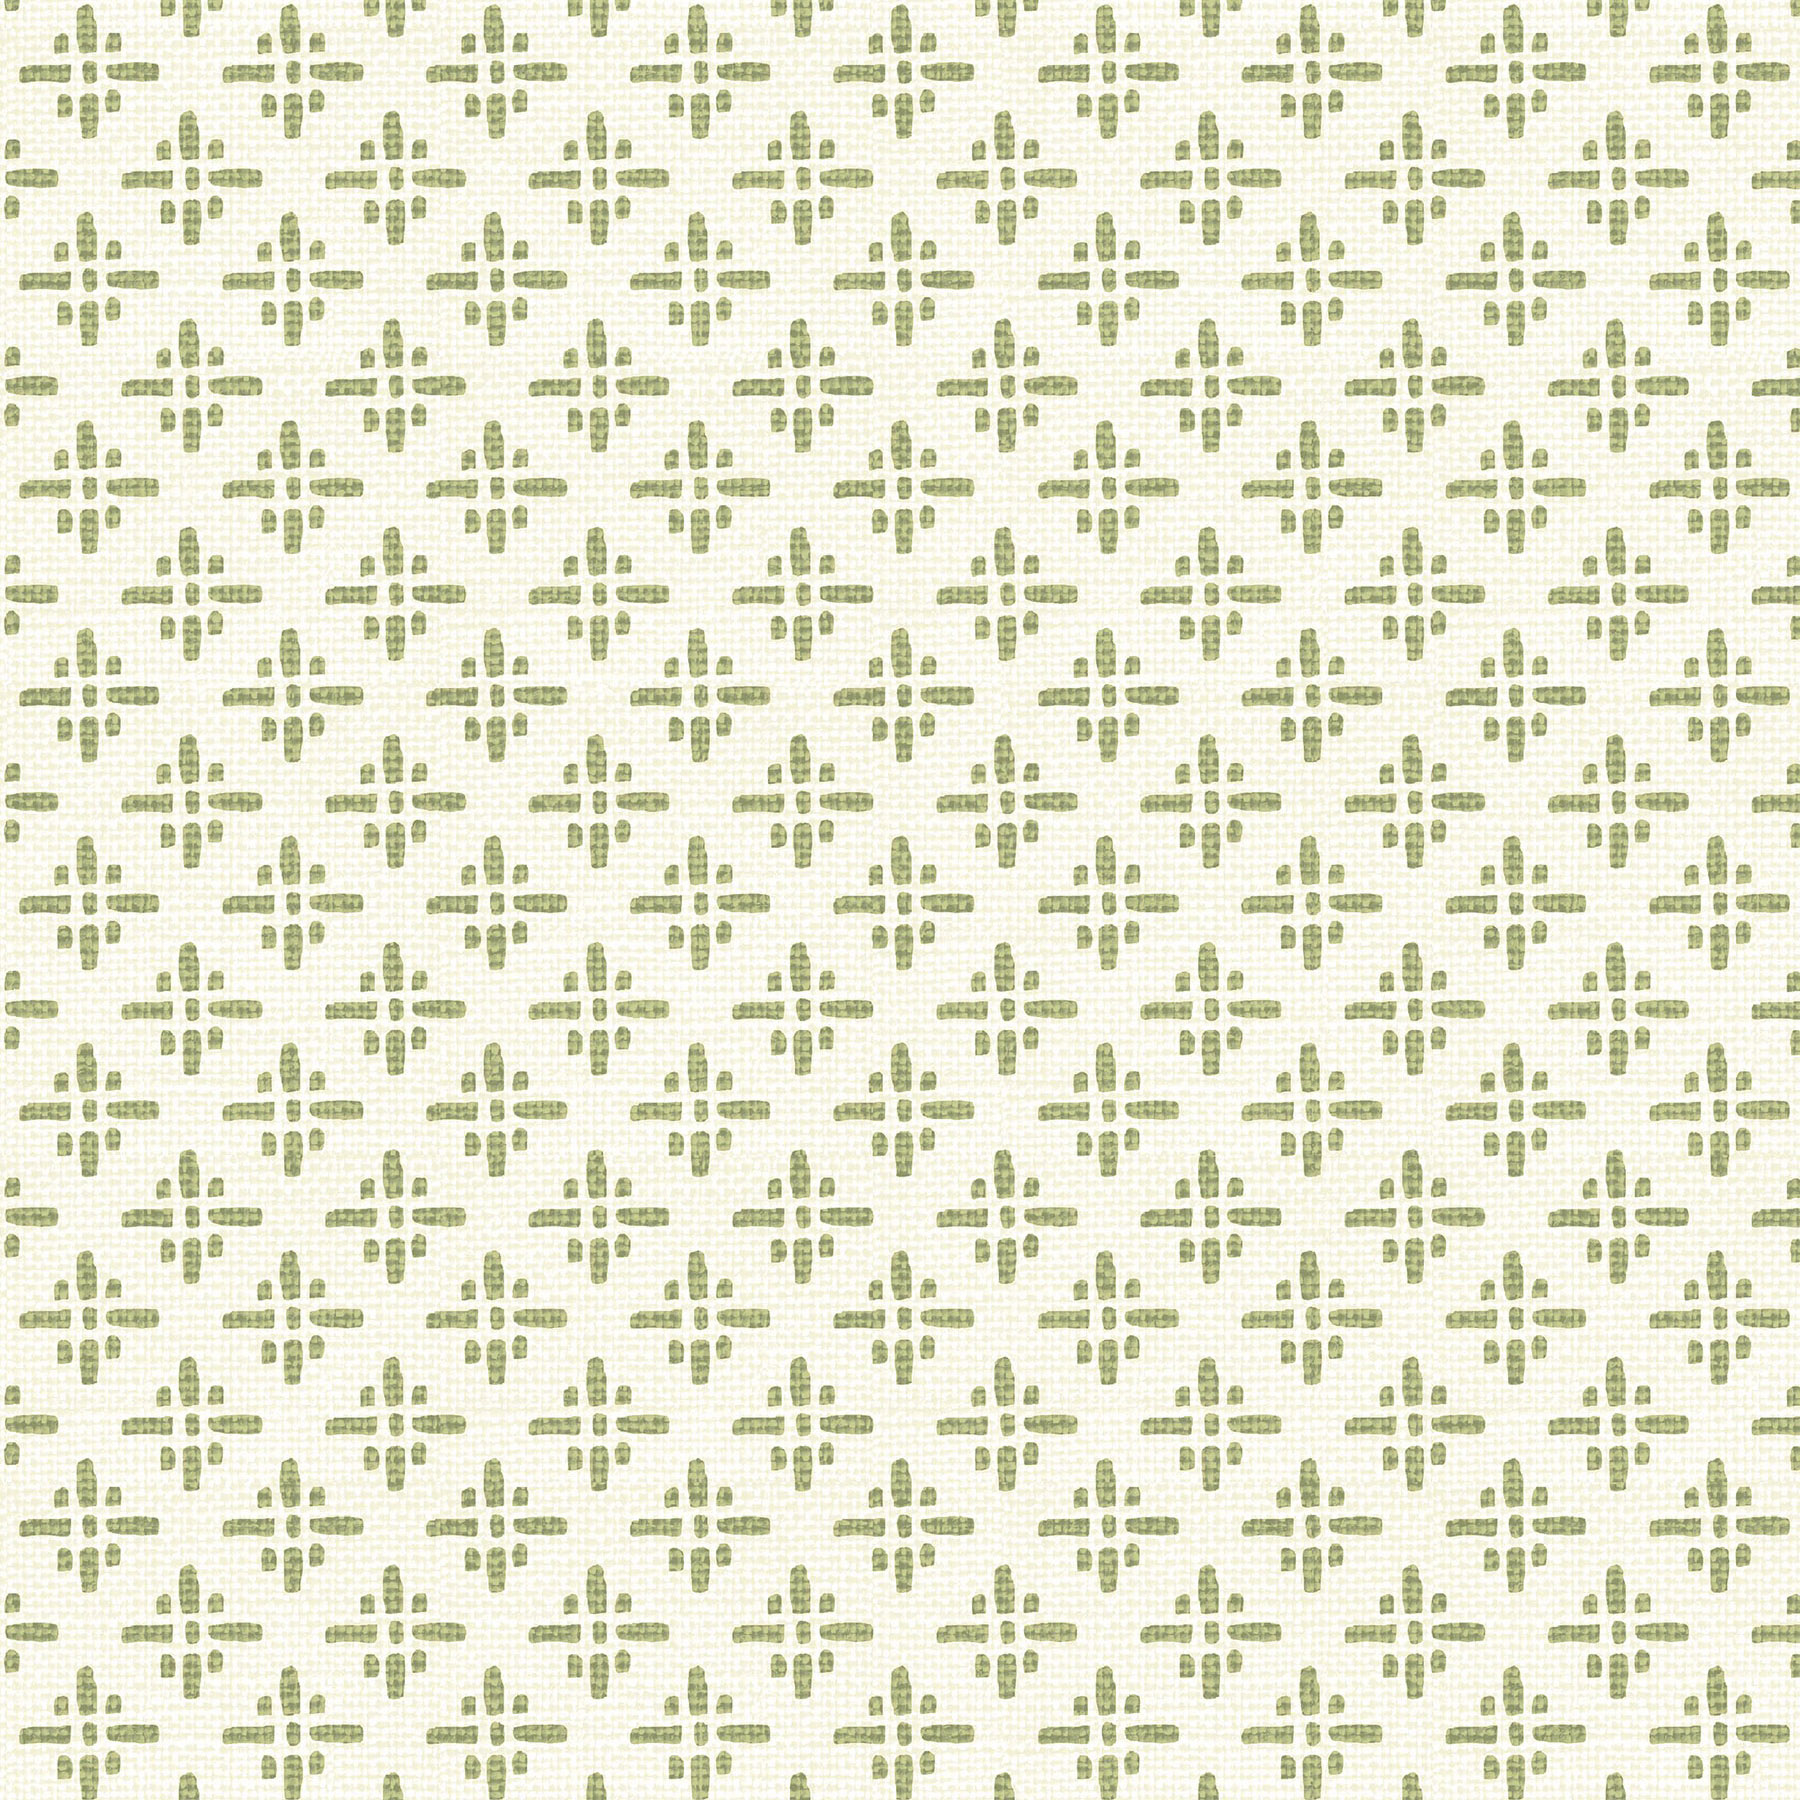 Joules Beckett Star Olive Green Wallpaper - 10m x 52cm